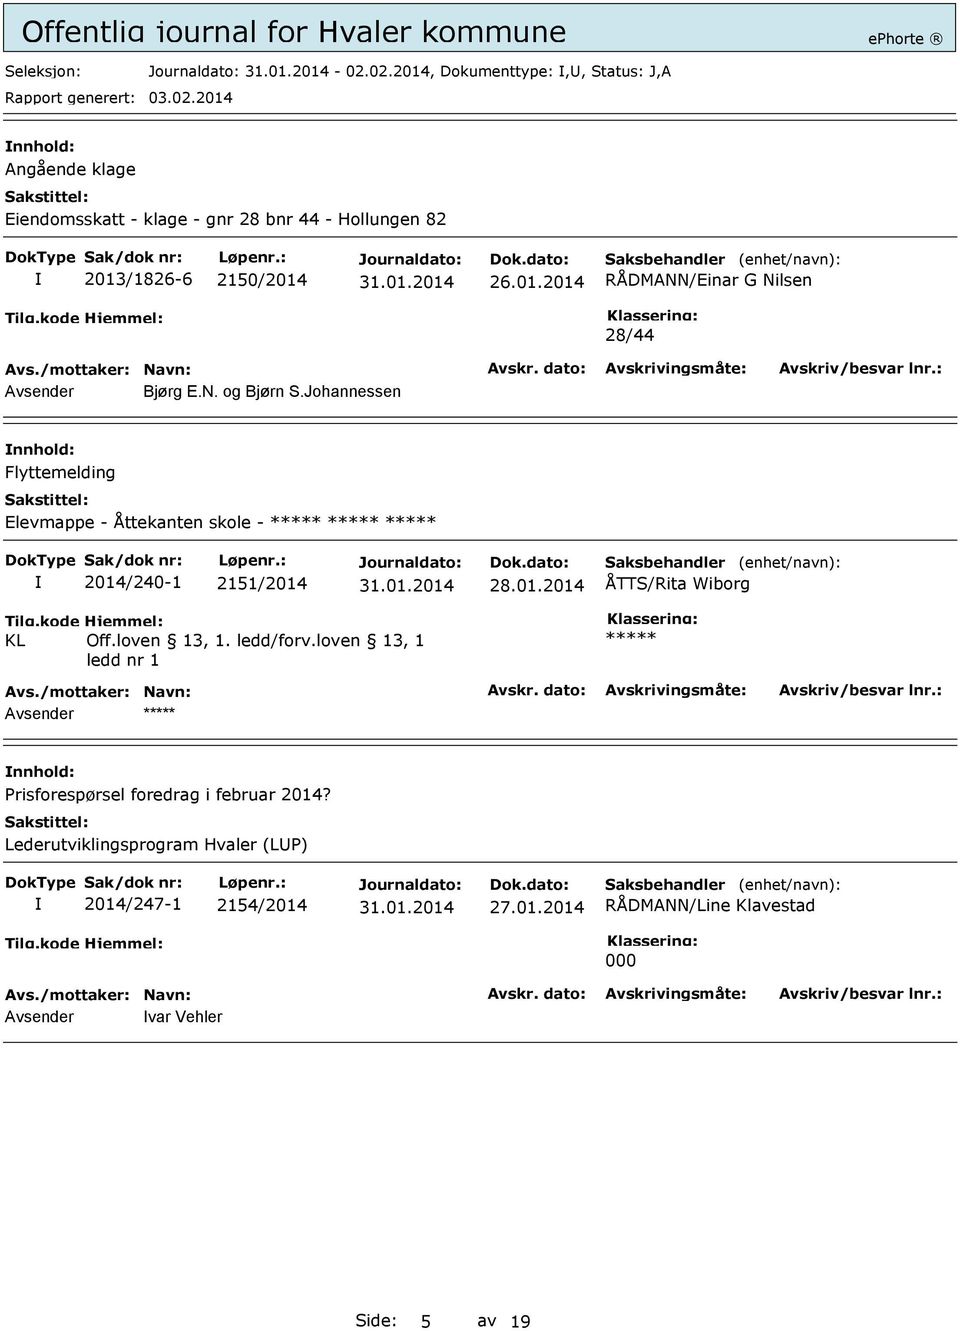 Johannessen Flyttemelding Elevmappe - Åttekanten skole - 2014/240-1 2151/2014 28.01.2014 ÅTTS/Rita Wiborg KL Off.loven 13, 1.